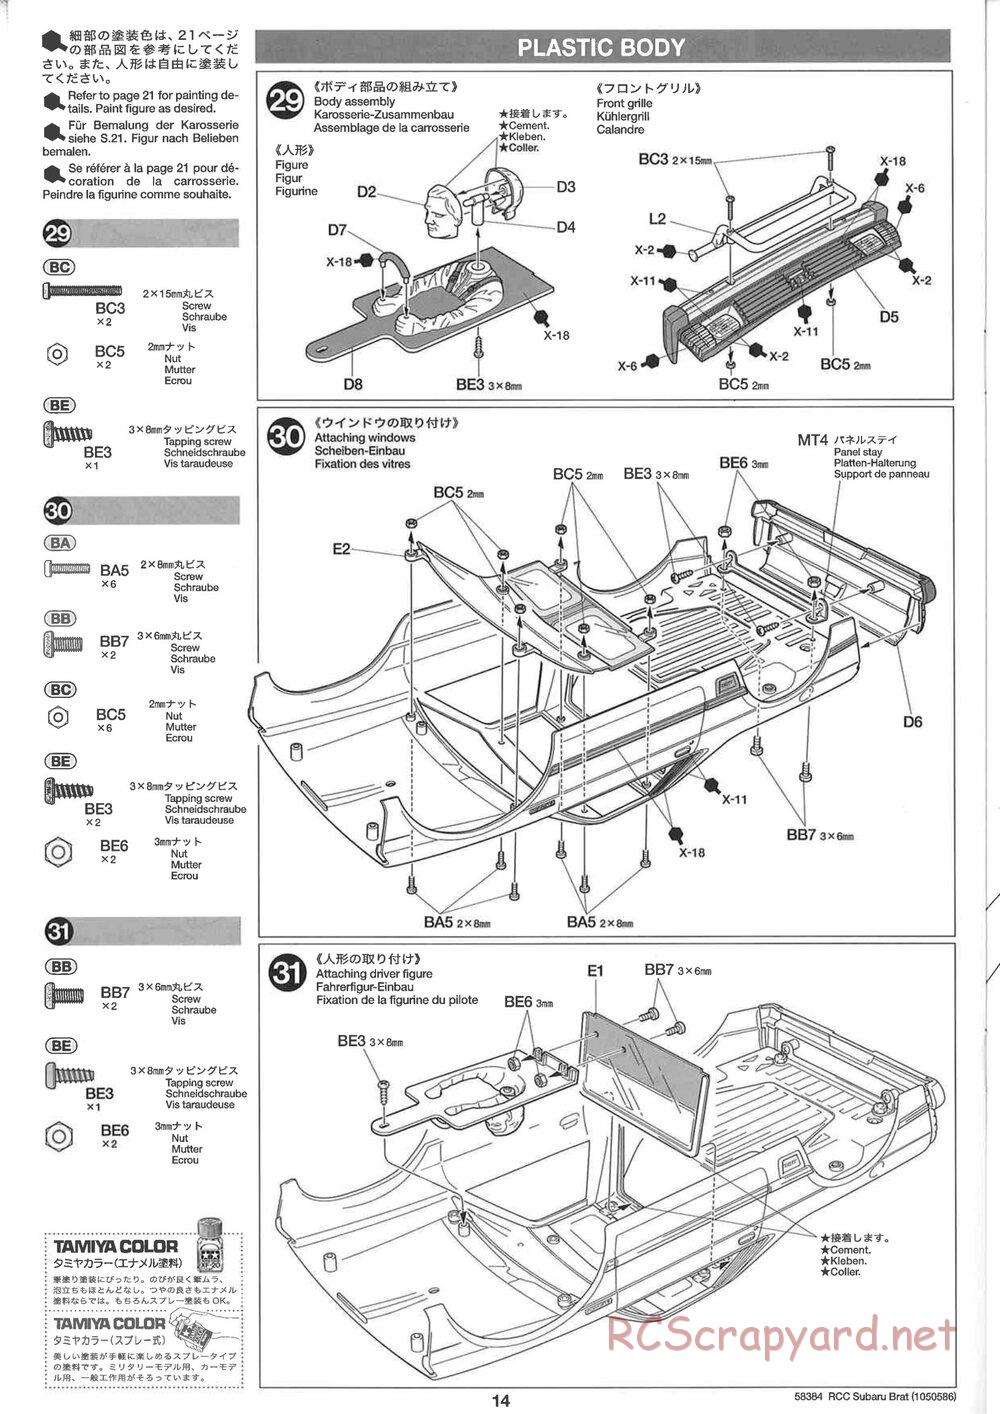 Tamiya - Subaru Brat 2007 - ORV Chassis - Manual - Page 14